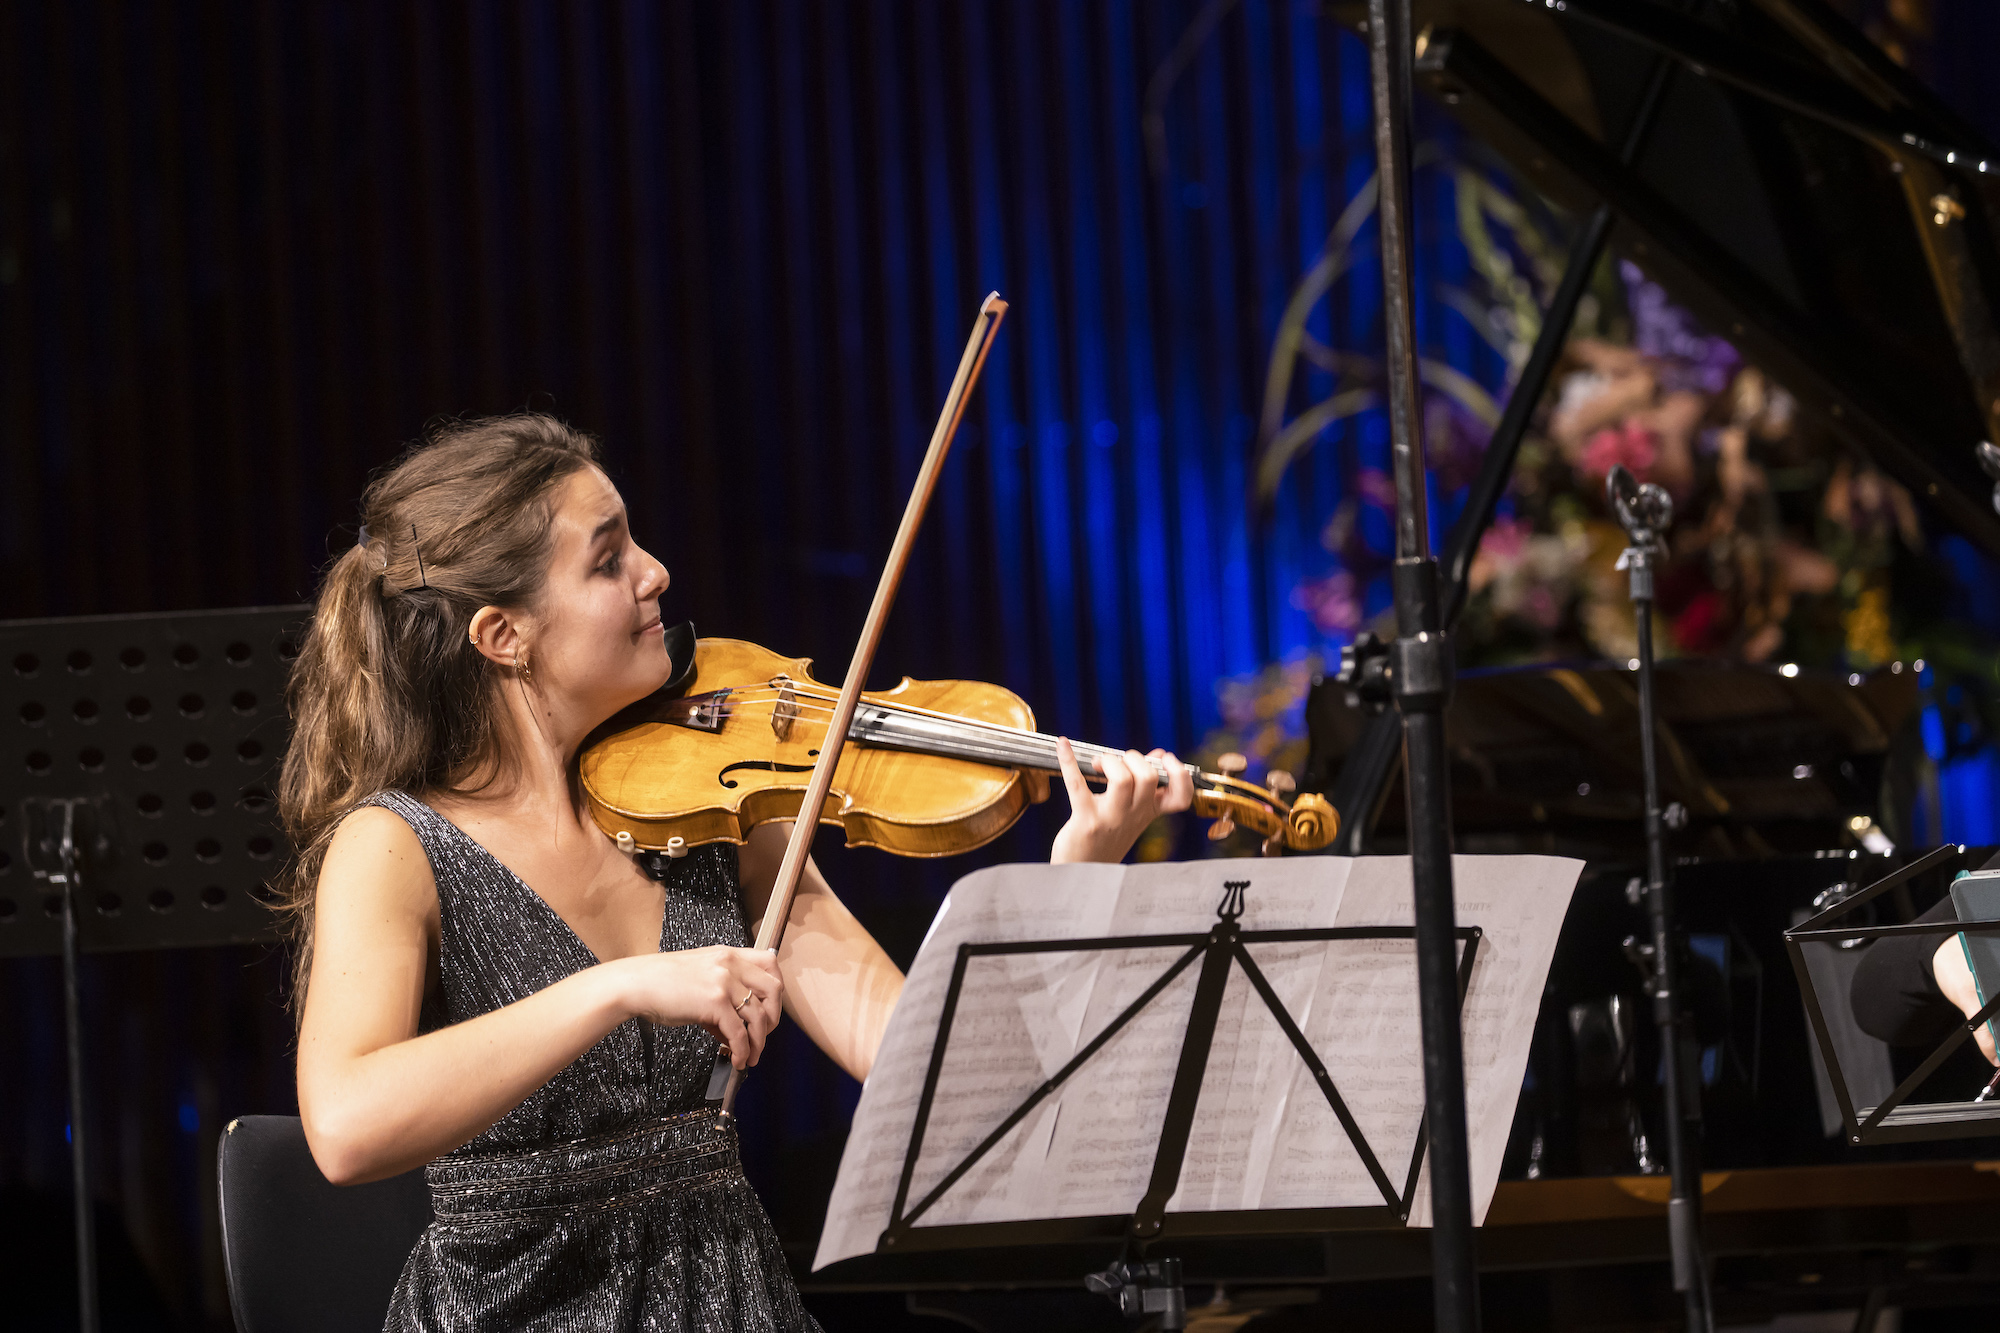 Joseph Joachim Violinwettbewerb 2021: Konzert Chiara Sannicandro, Semifinale am 07.10.2021